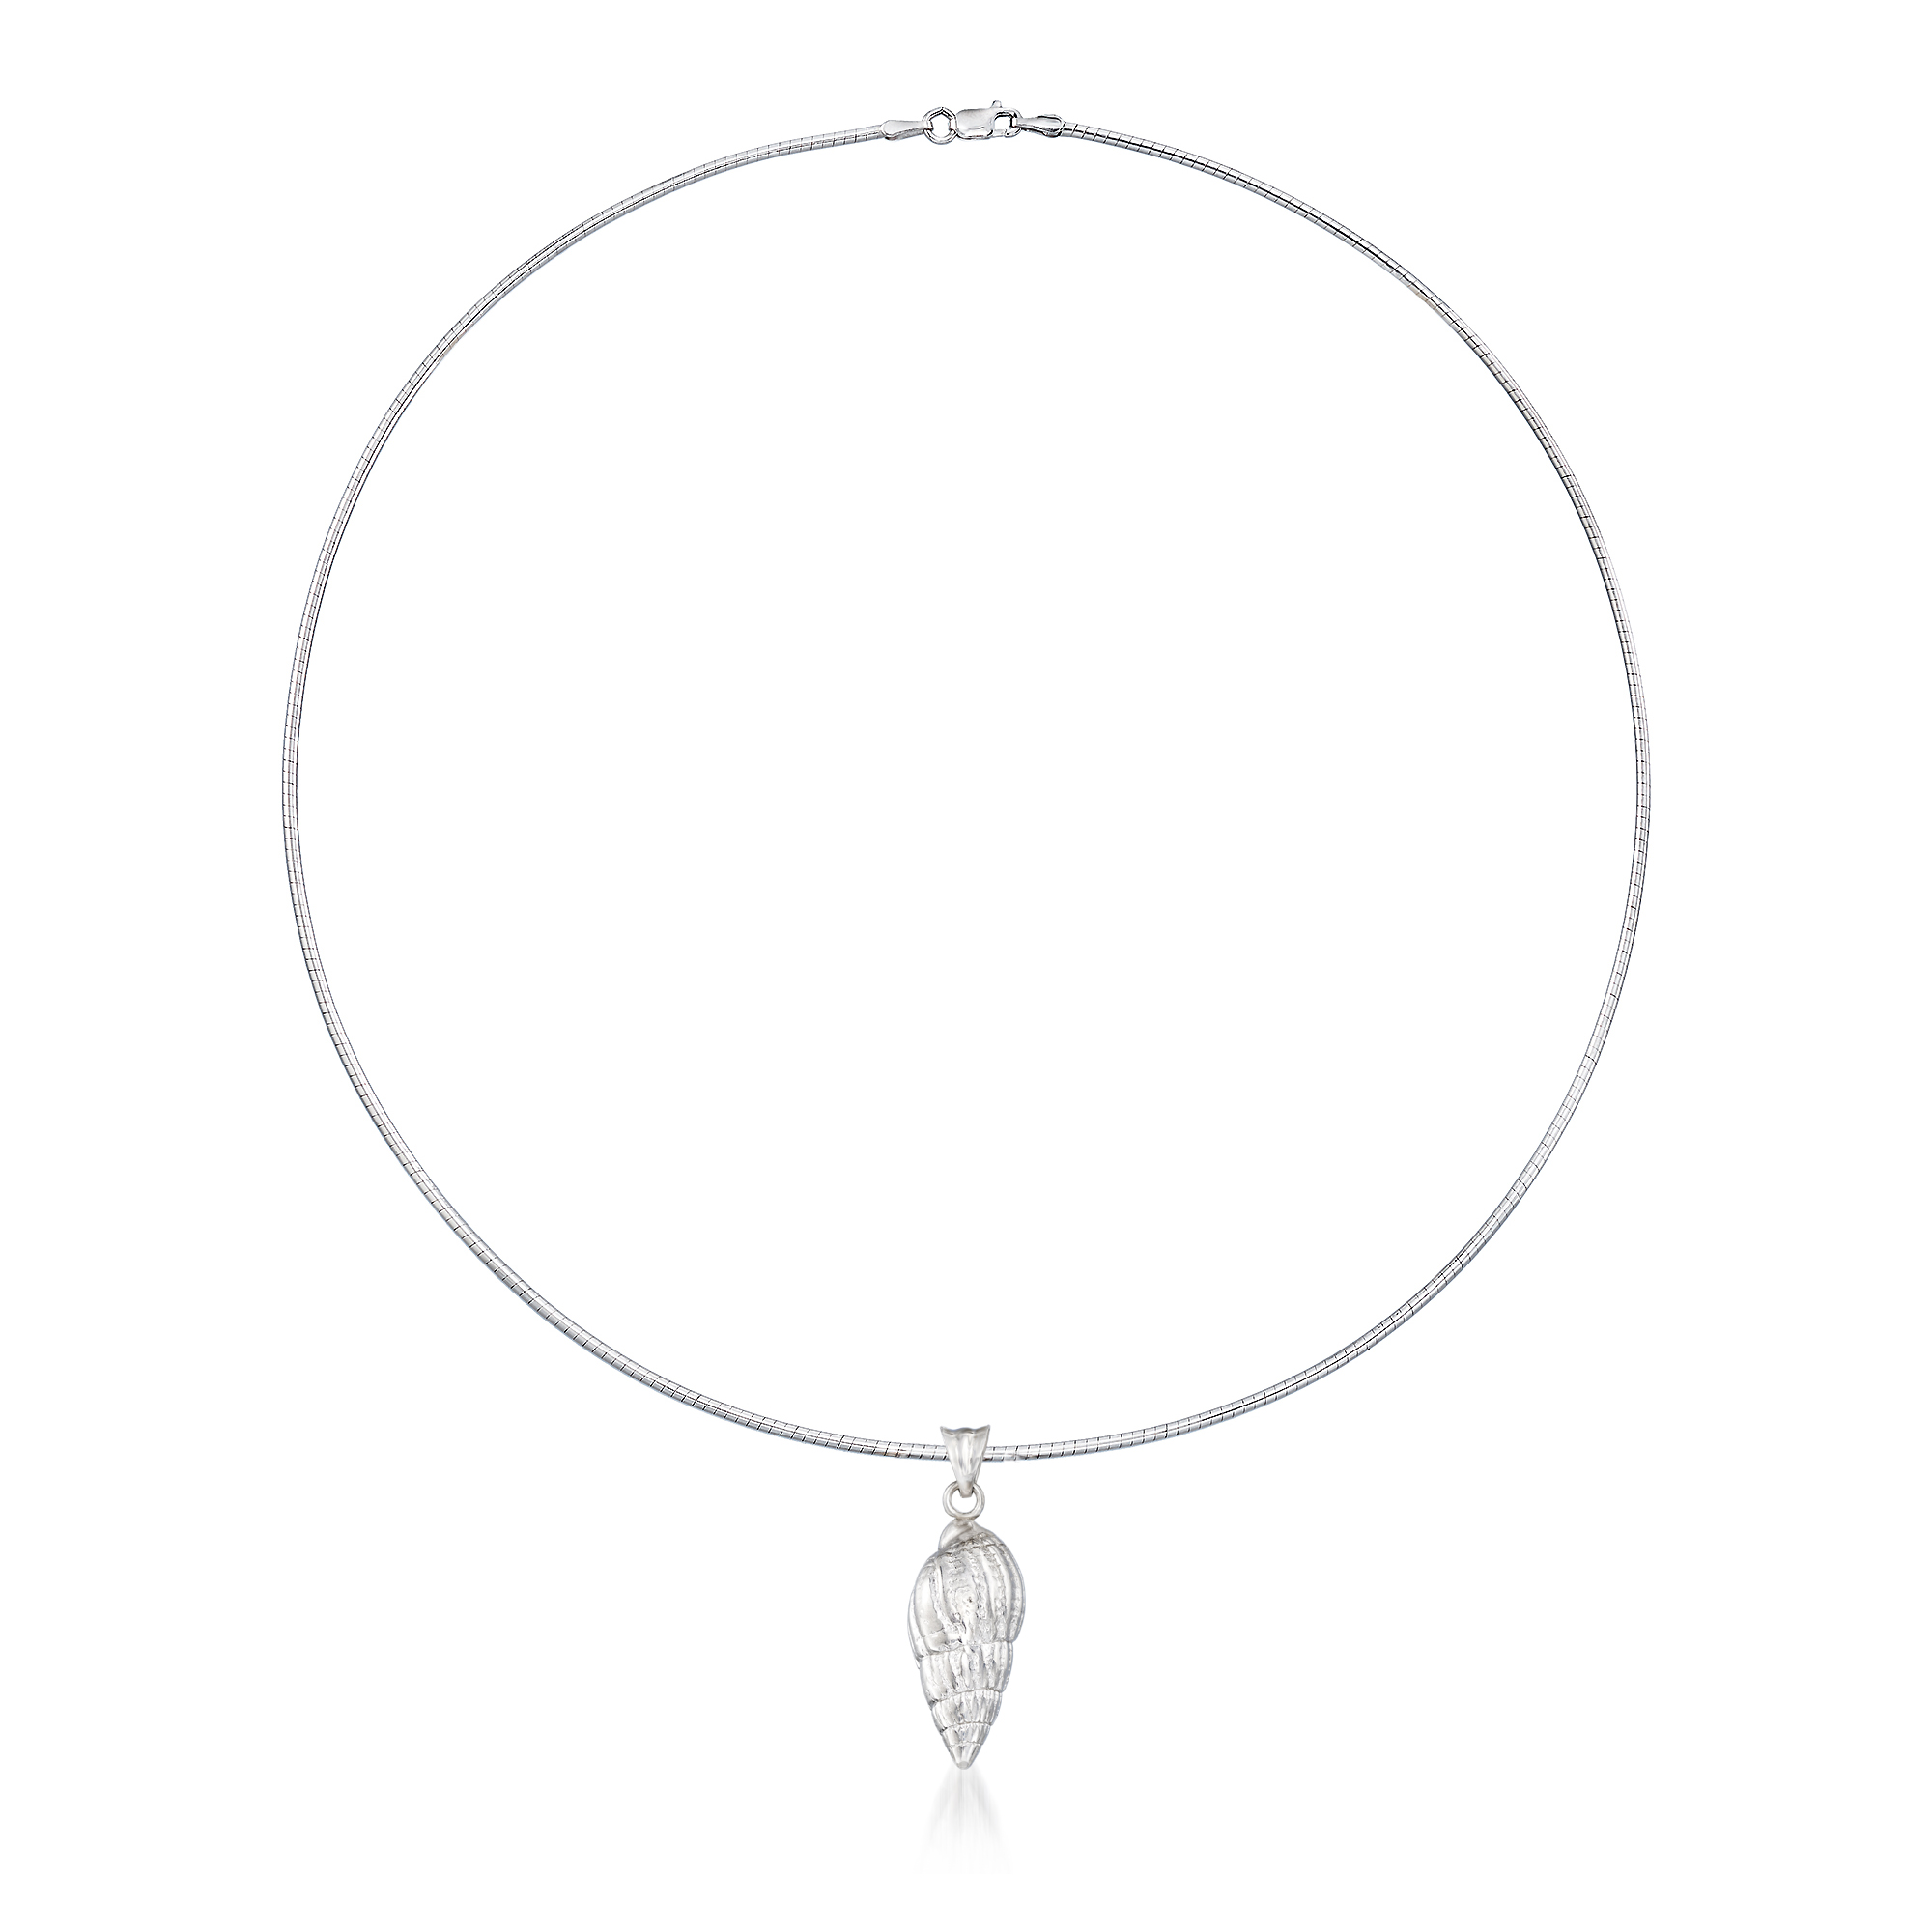 Italian Sterling Silver Seashell Pendant Necklace. 18